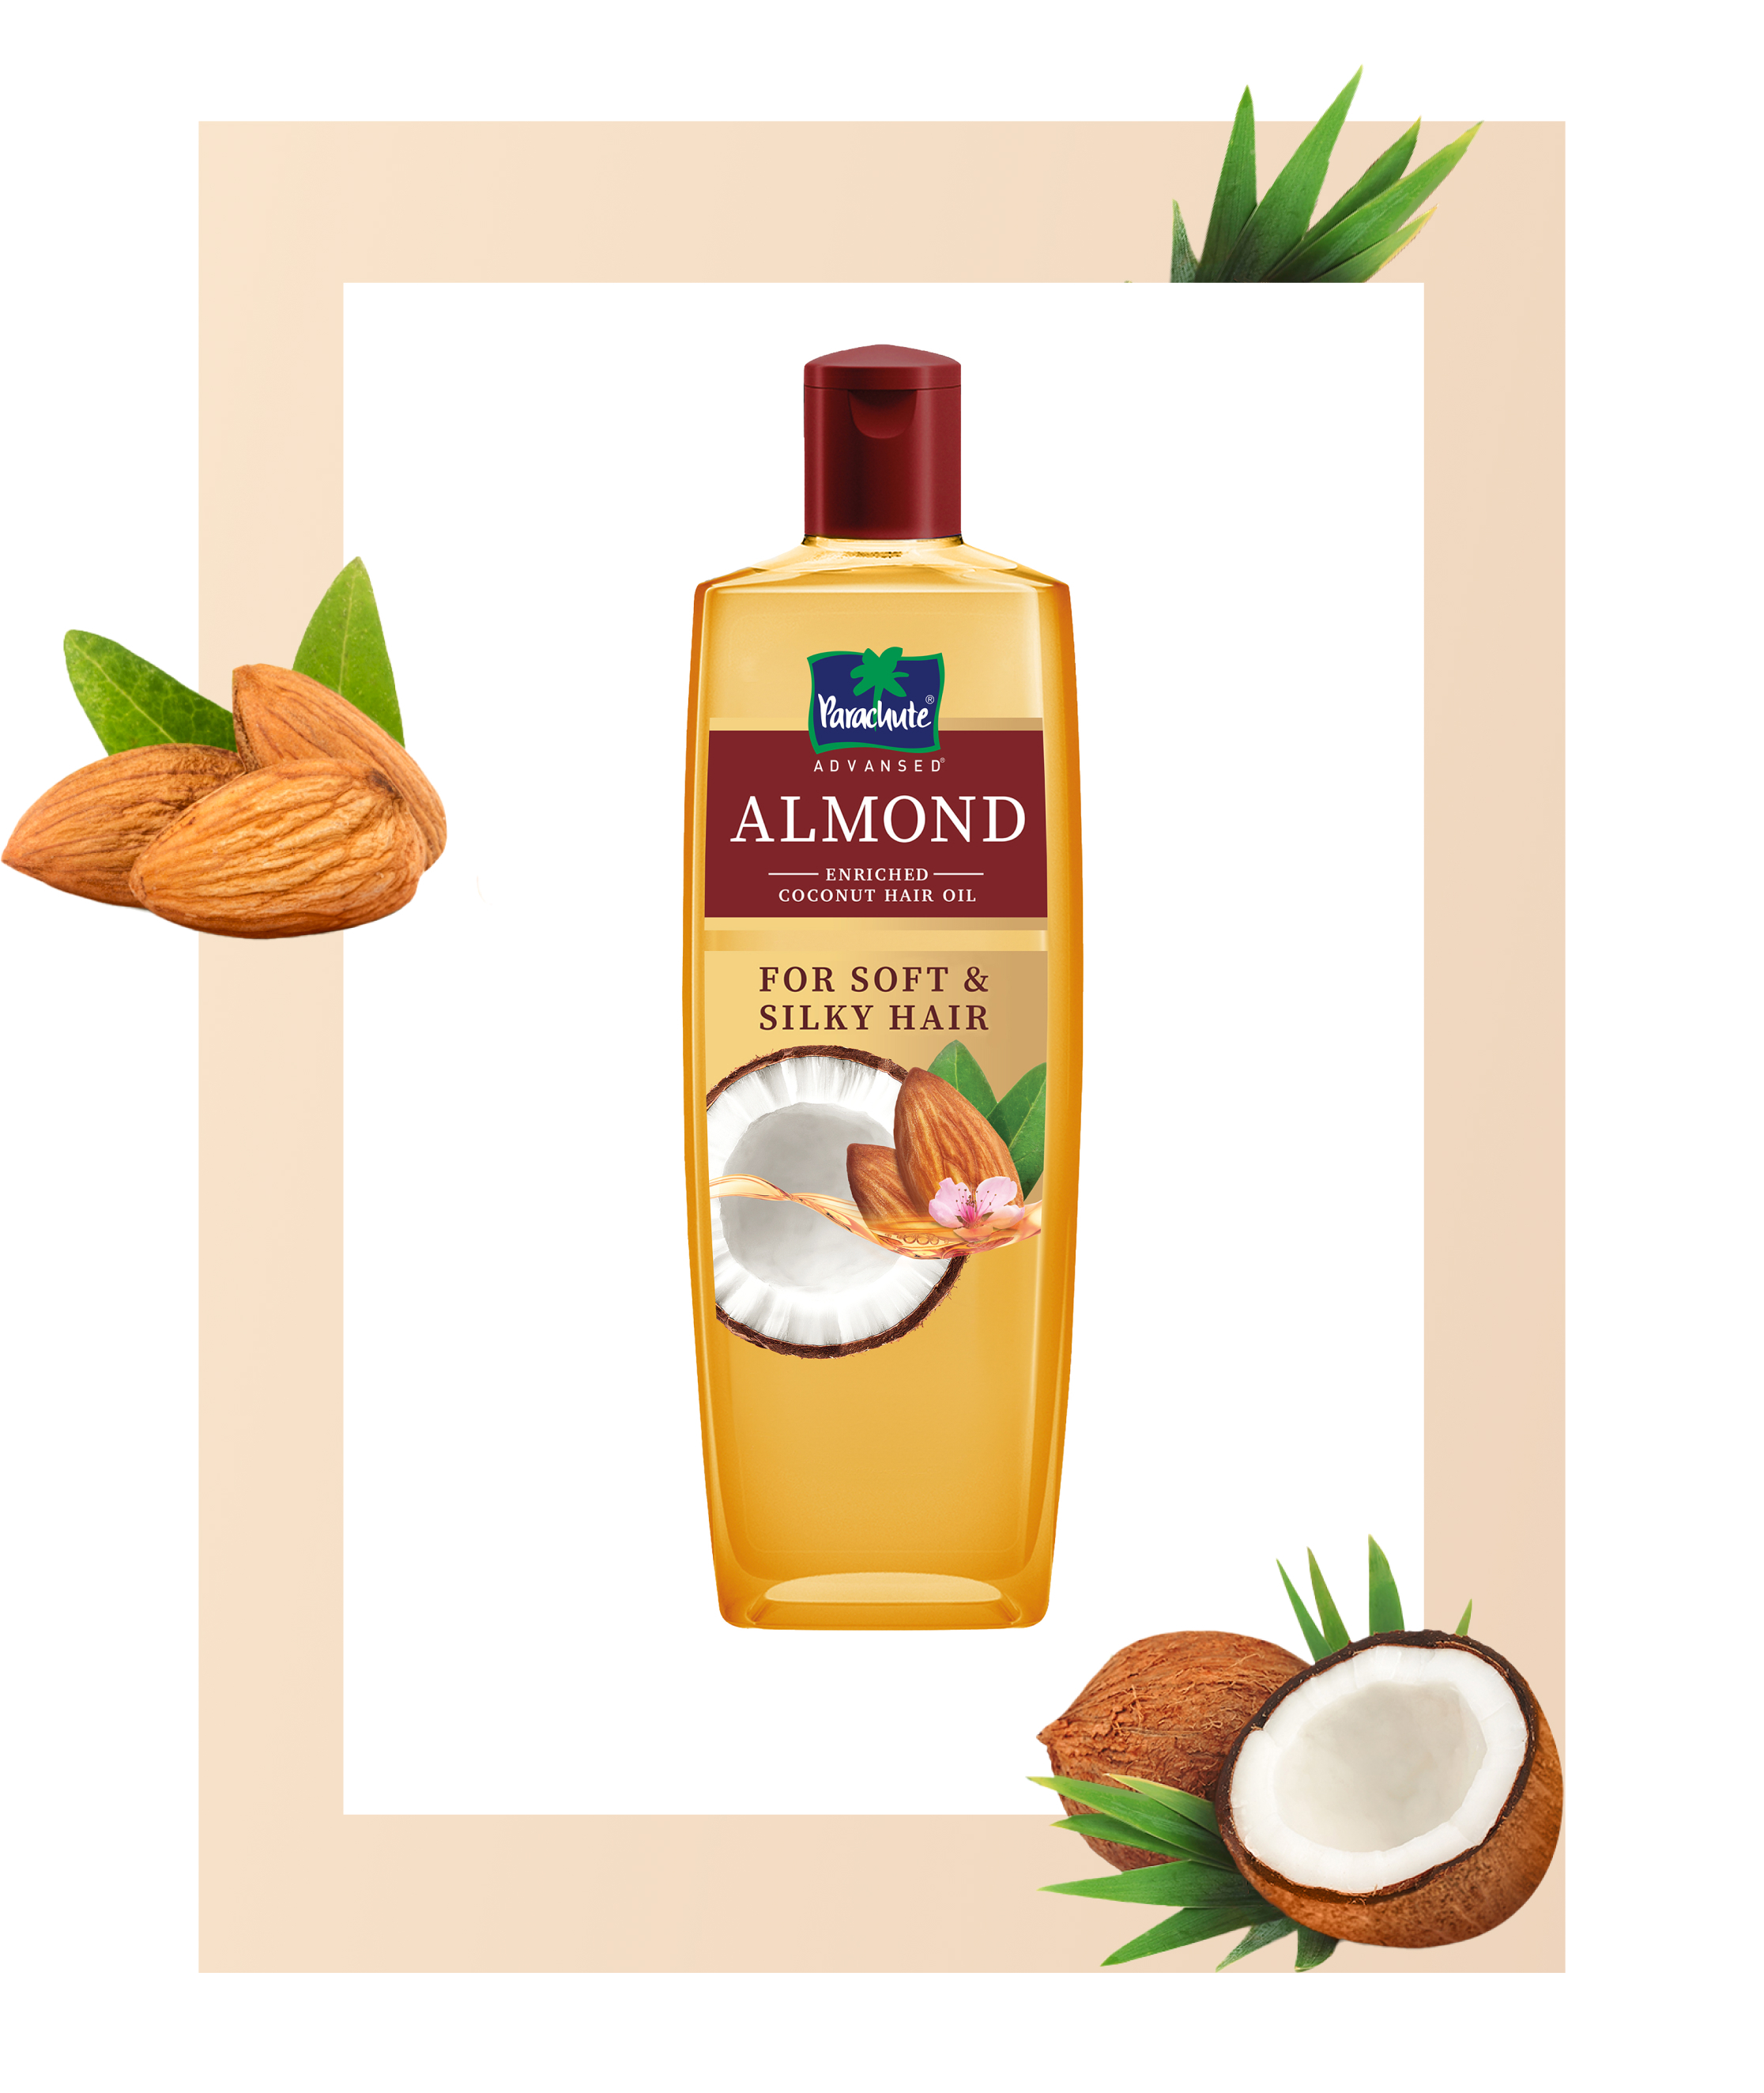 A bottle of Parachute Advansed Almond hair oil